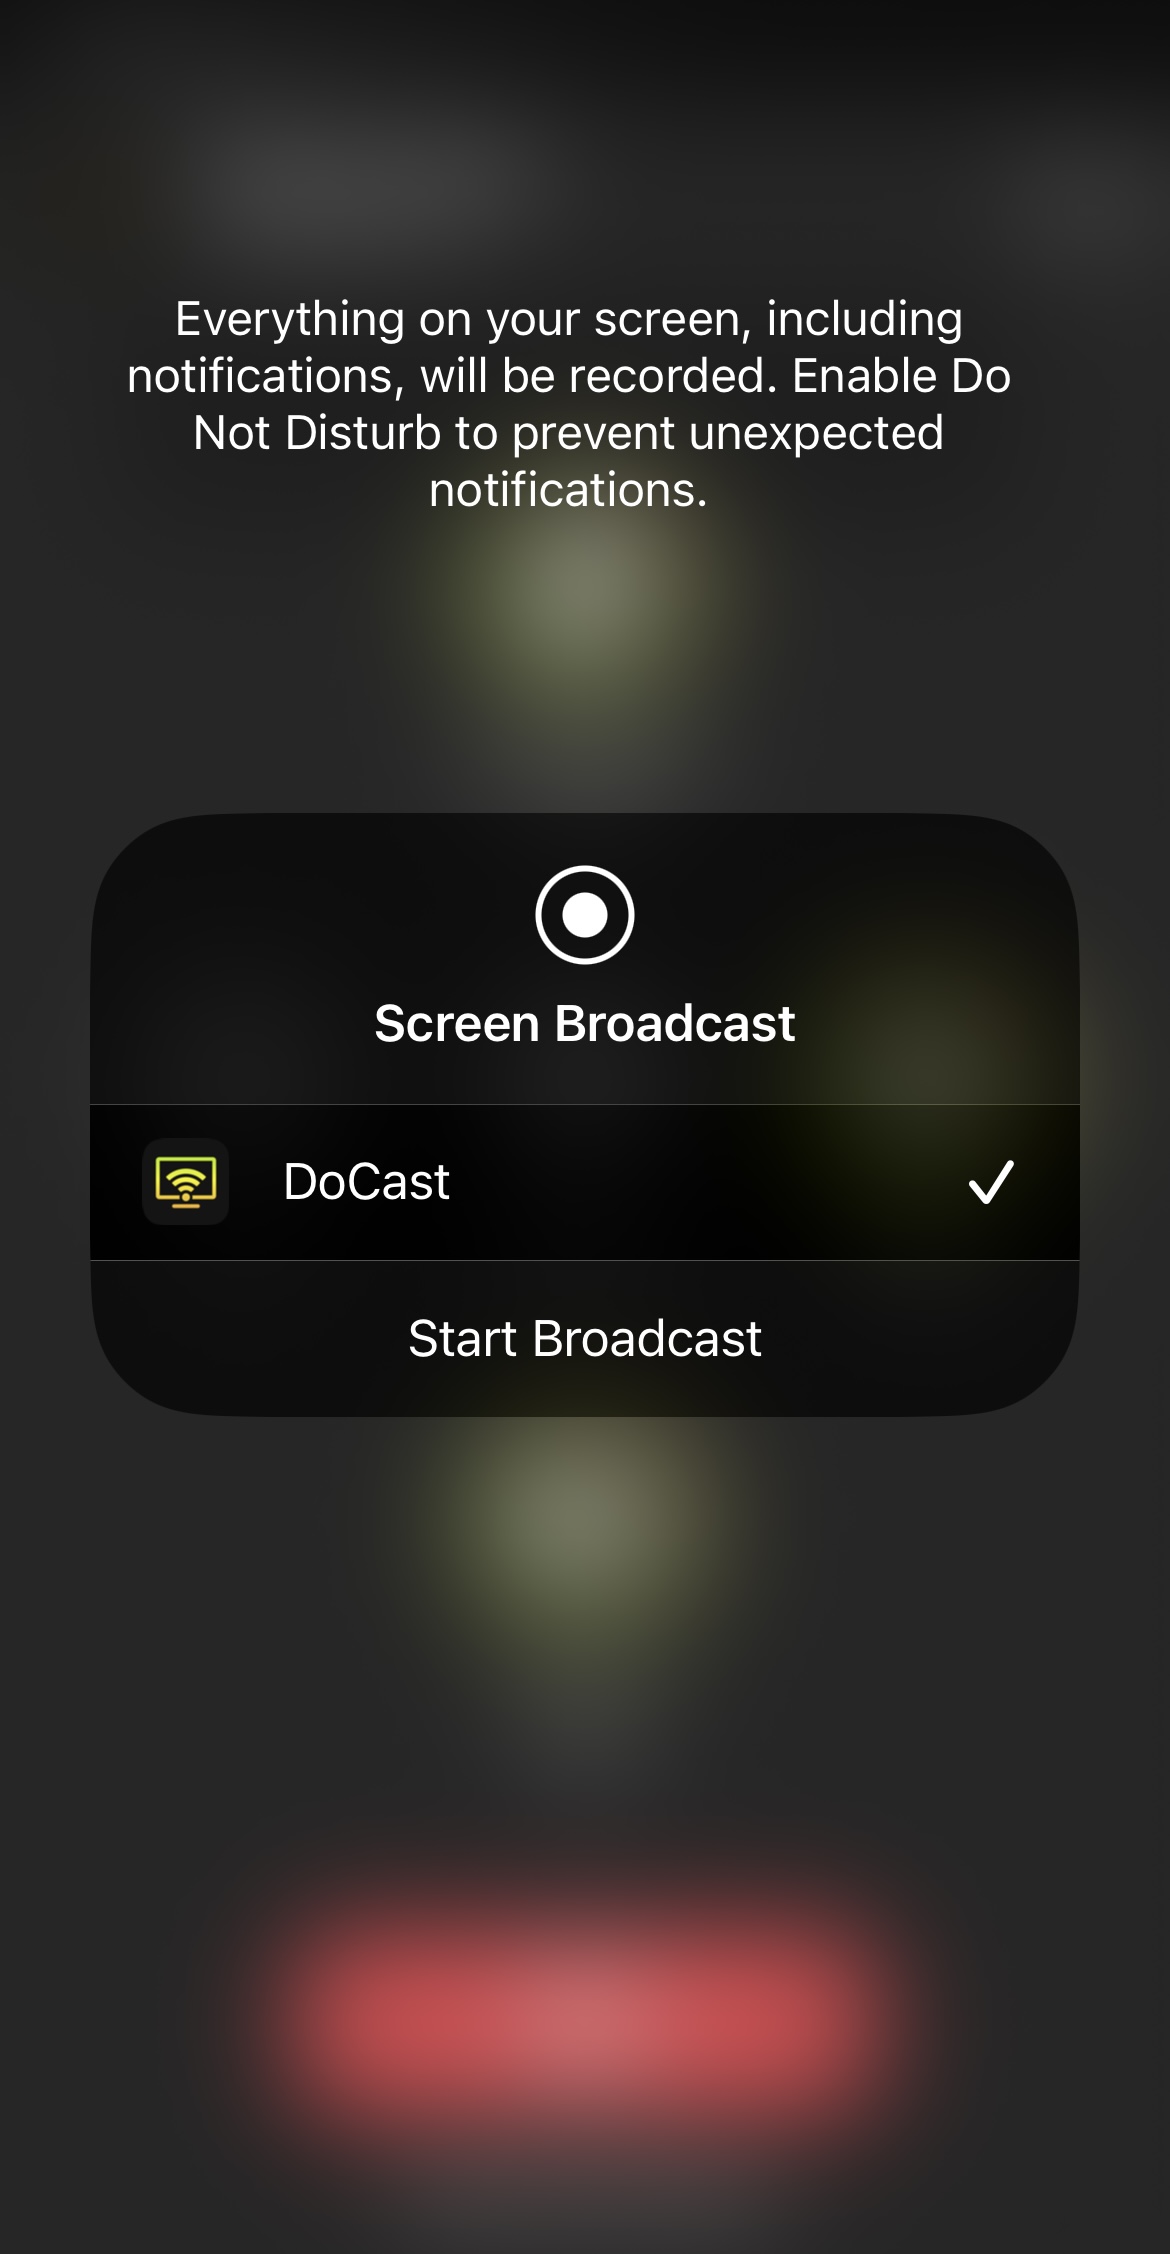 Broadcasting iPhone's screen to TV via DoCast app